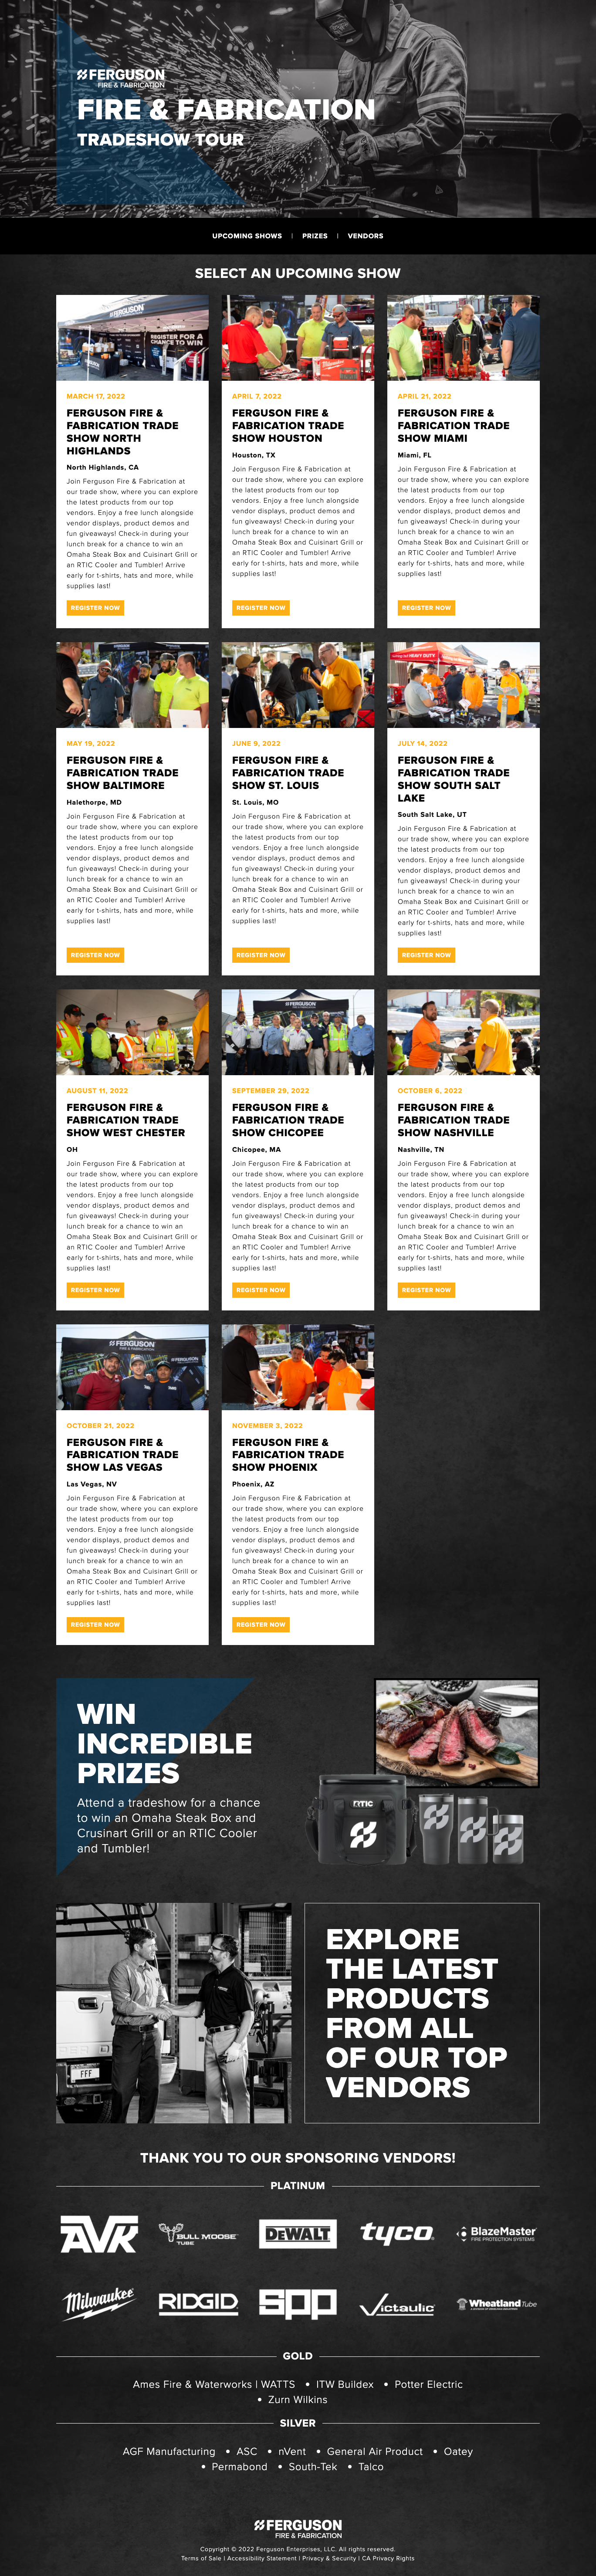 Website Design & Development for Ferguson Fire & Fabrication